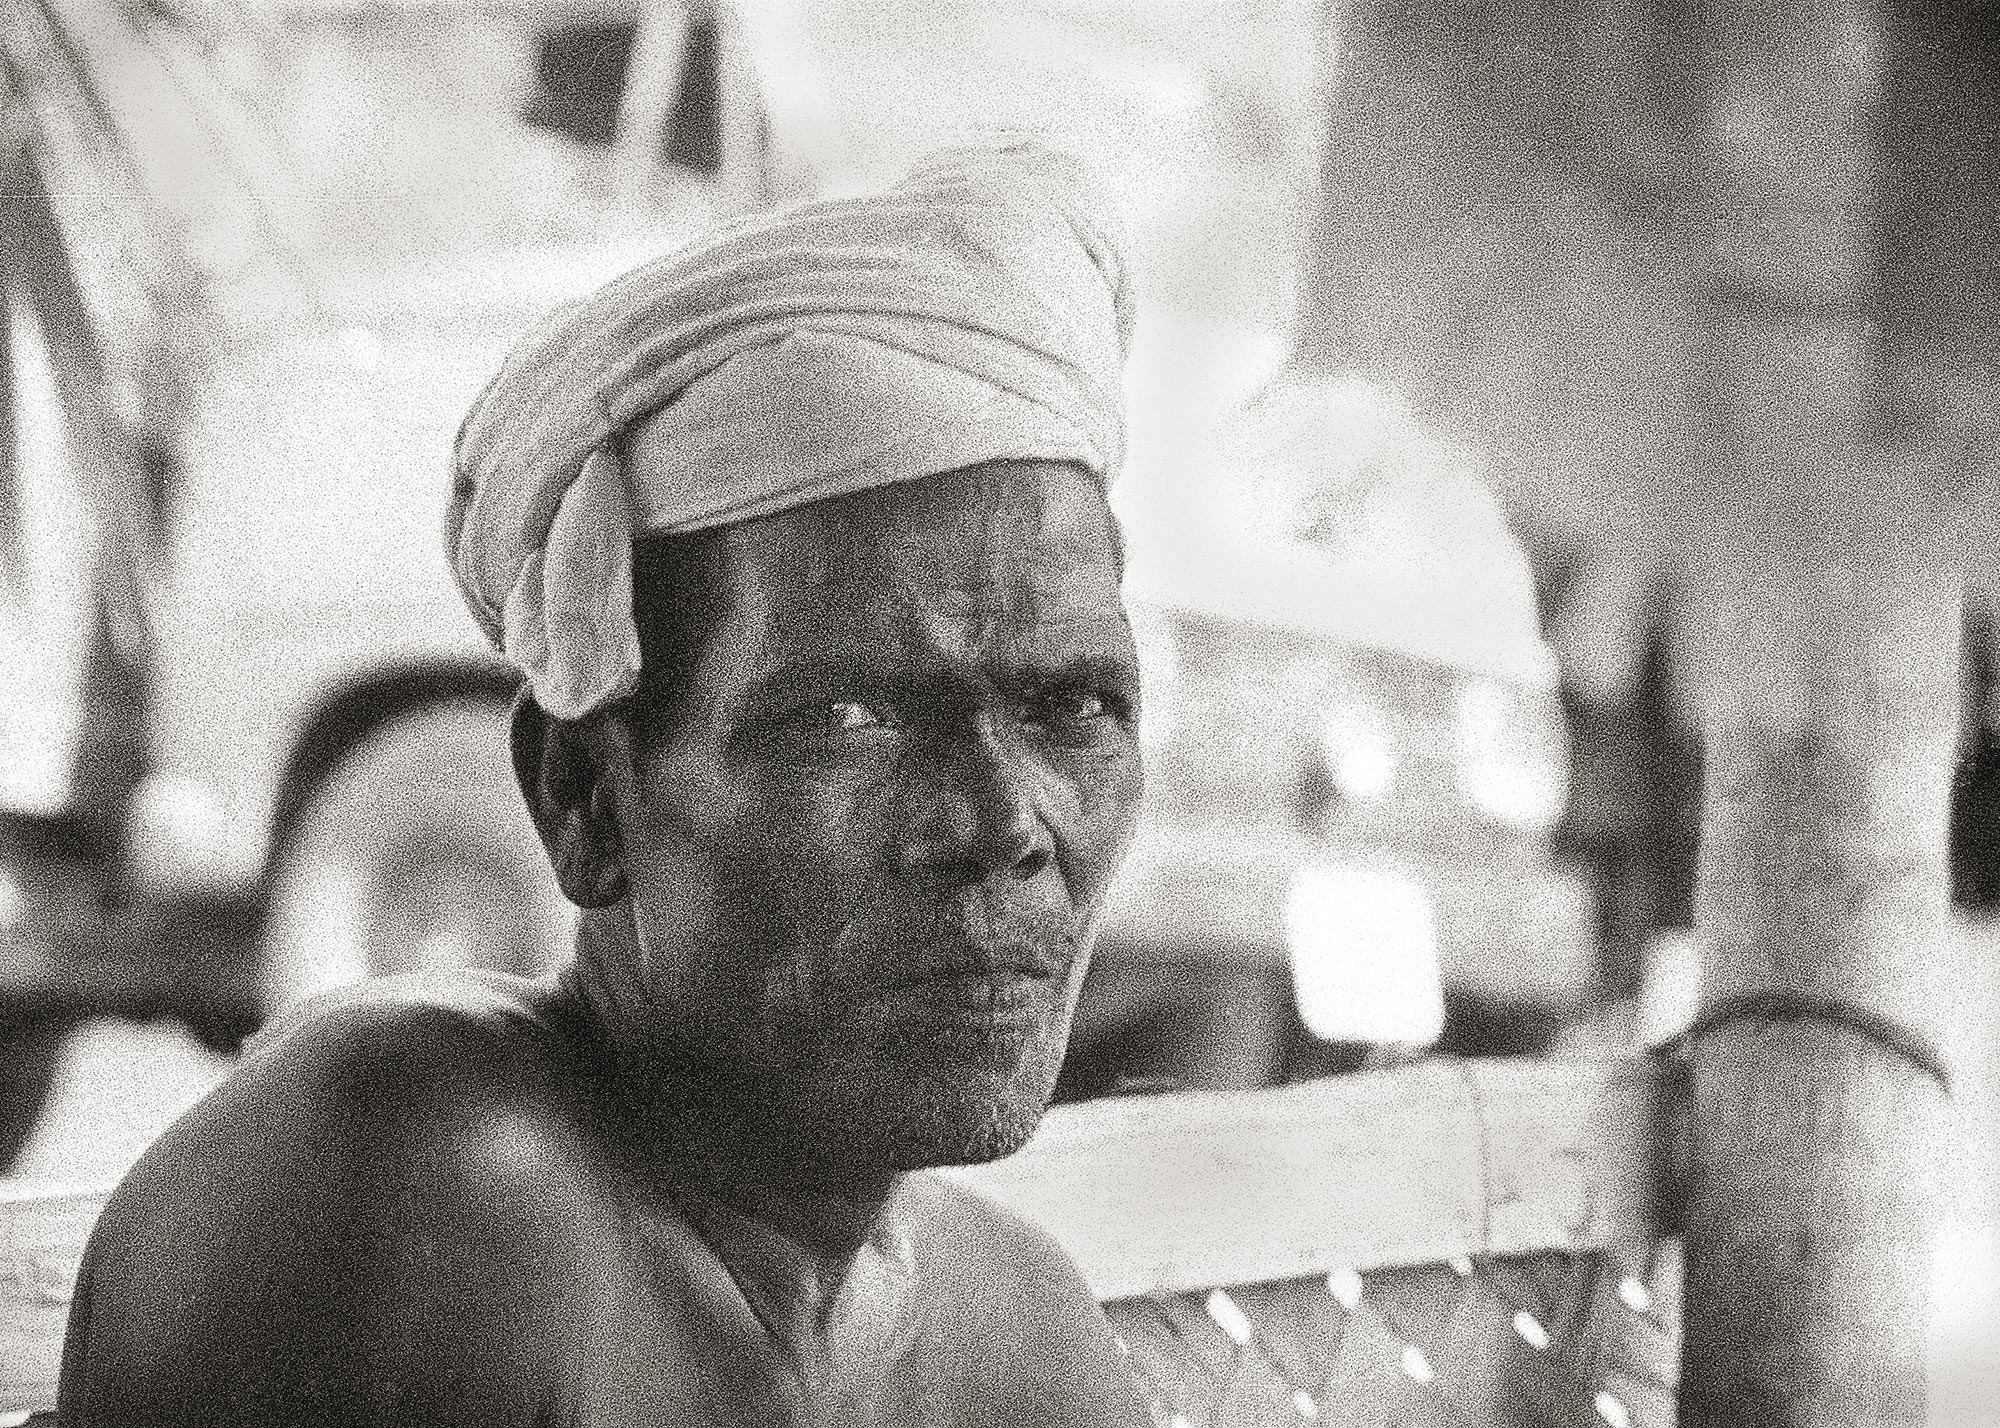 Boatman © Abul Kalam Azad 1980 - 85